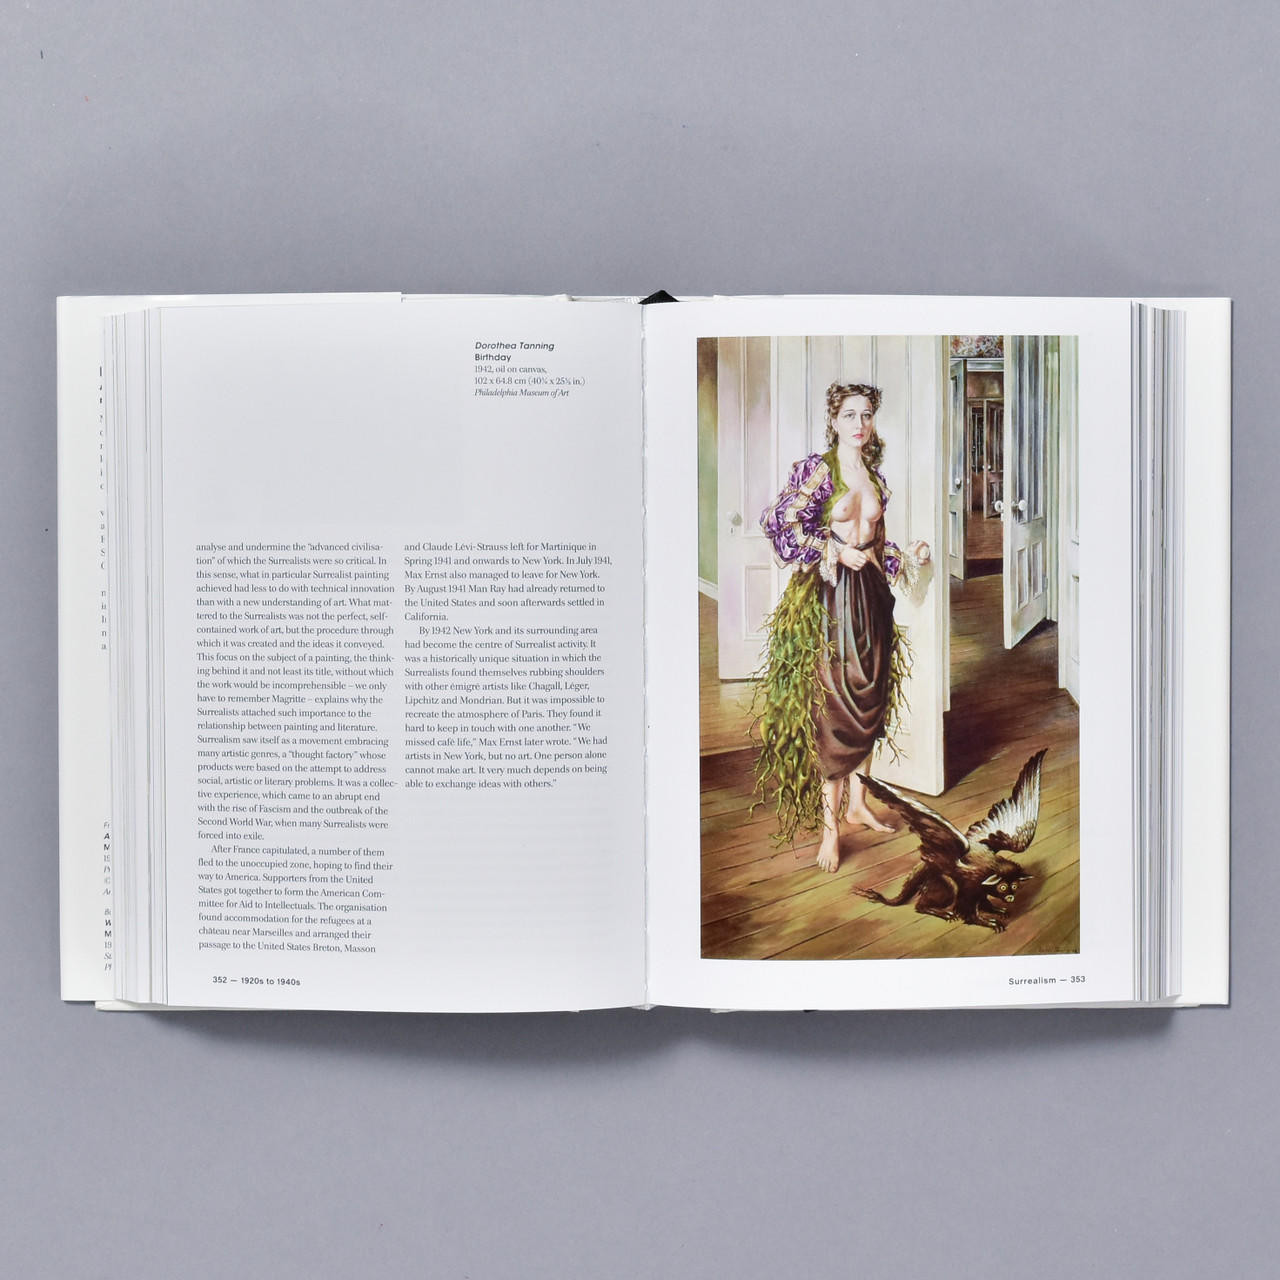 The Design Book: Mini Edition - Philadelphia Museum Of Art